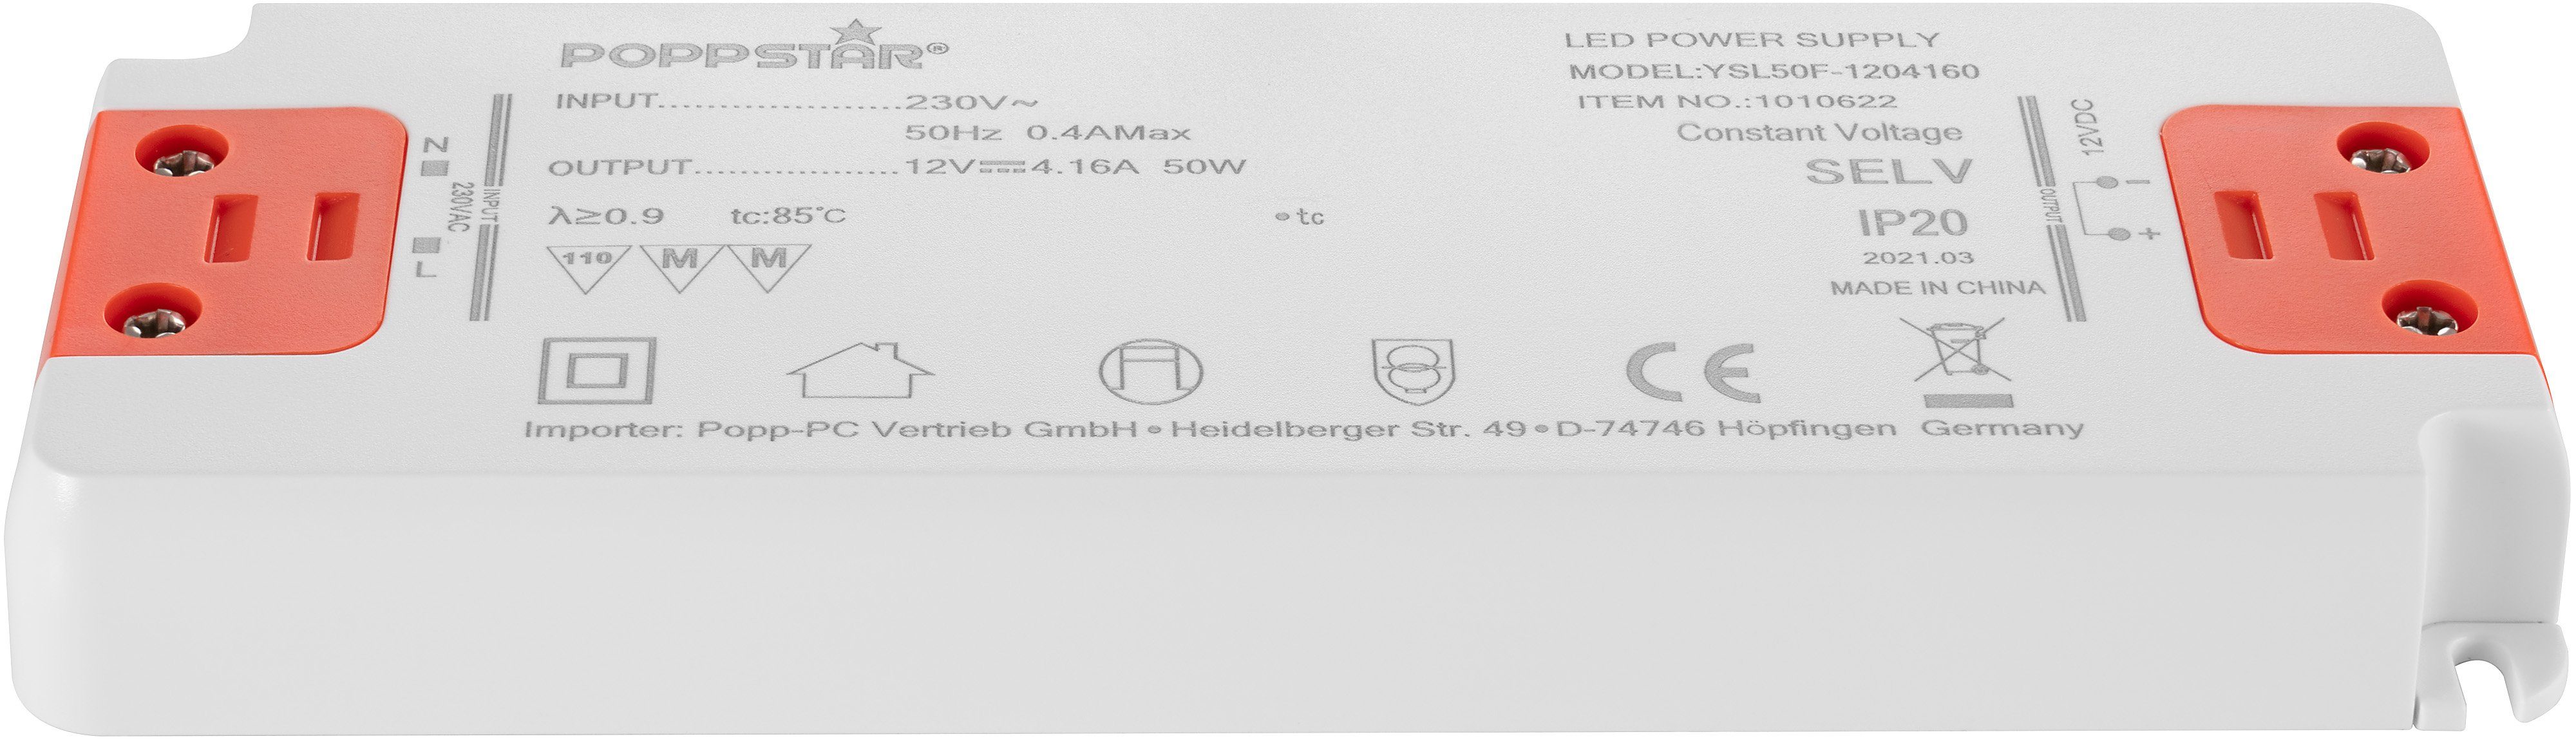 / LED (LED 50 Trafo Supply Power flach Slim LEDs) Watt ultra 0,5 4,16A V AC bis Poppstar 12V 12 230V LED-Transformator (für DC